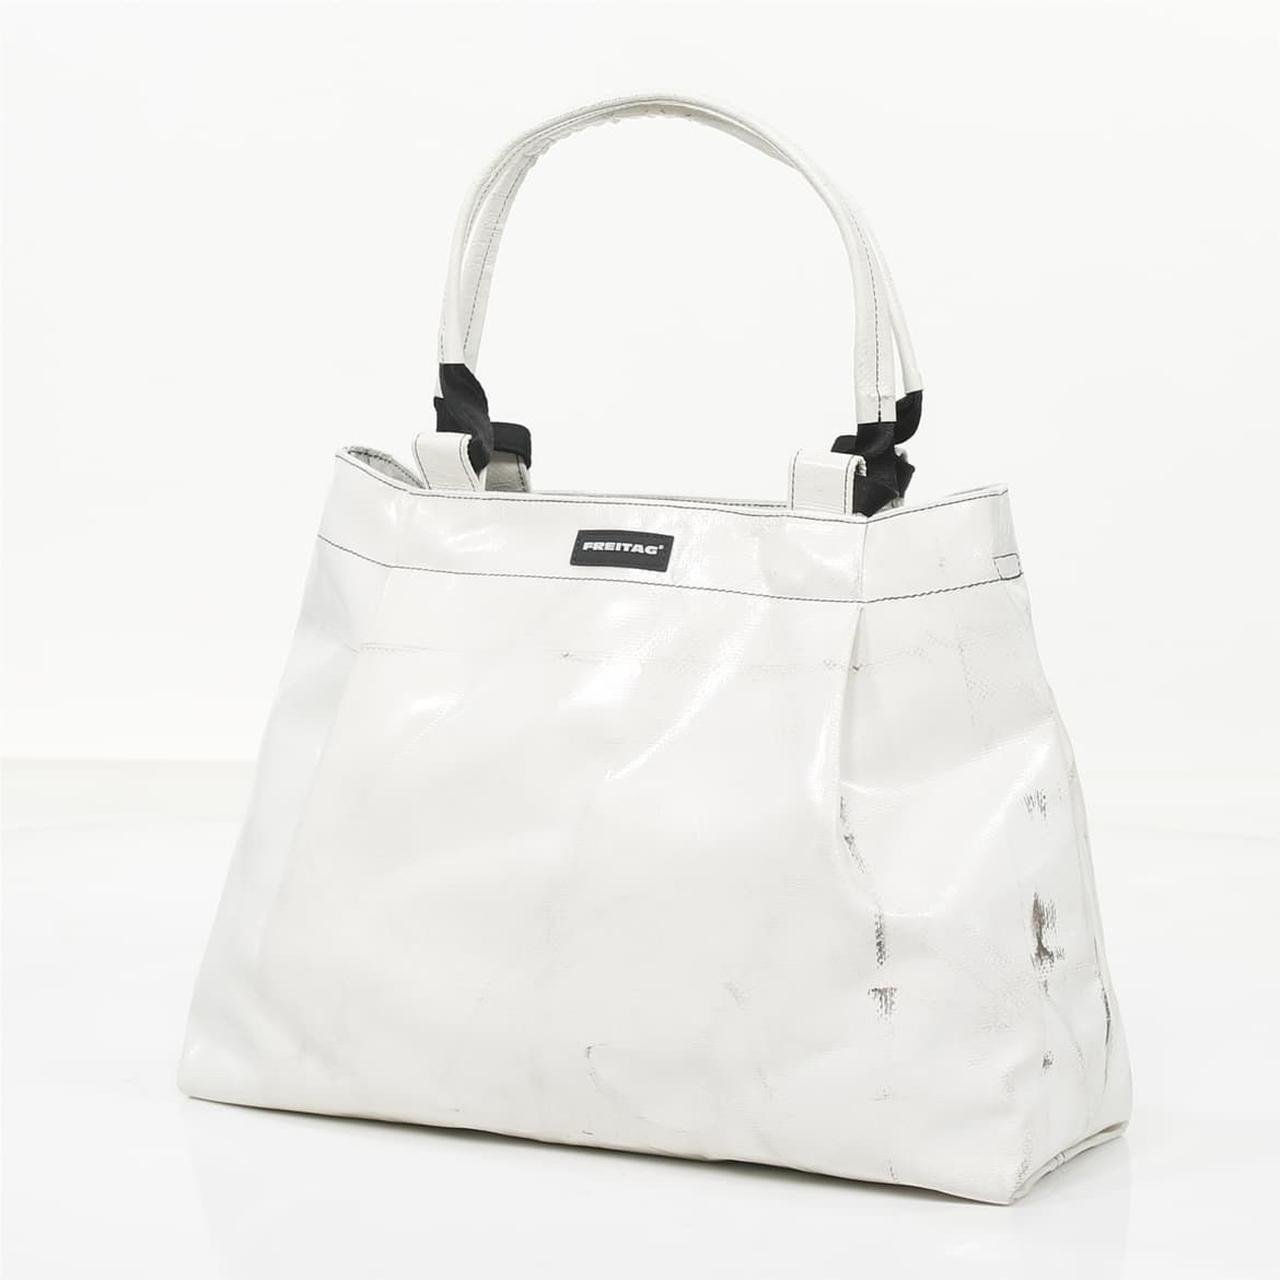 ✨SALE✨, Freitag SALLY Handbag, ➖ in great condition, ➖